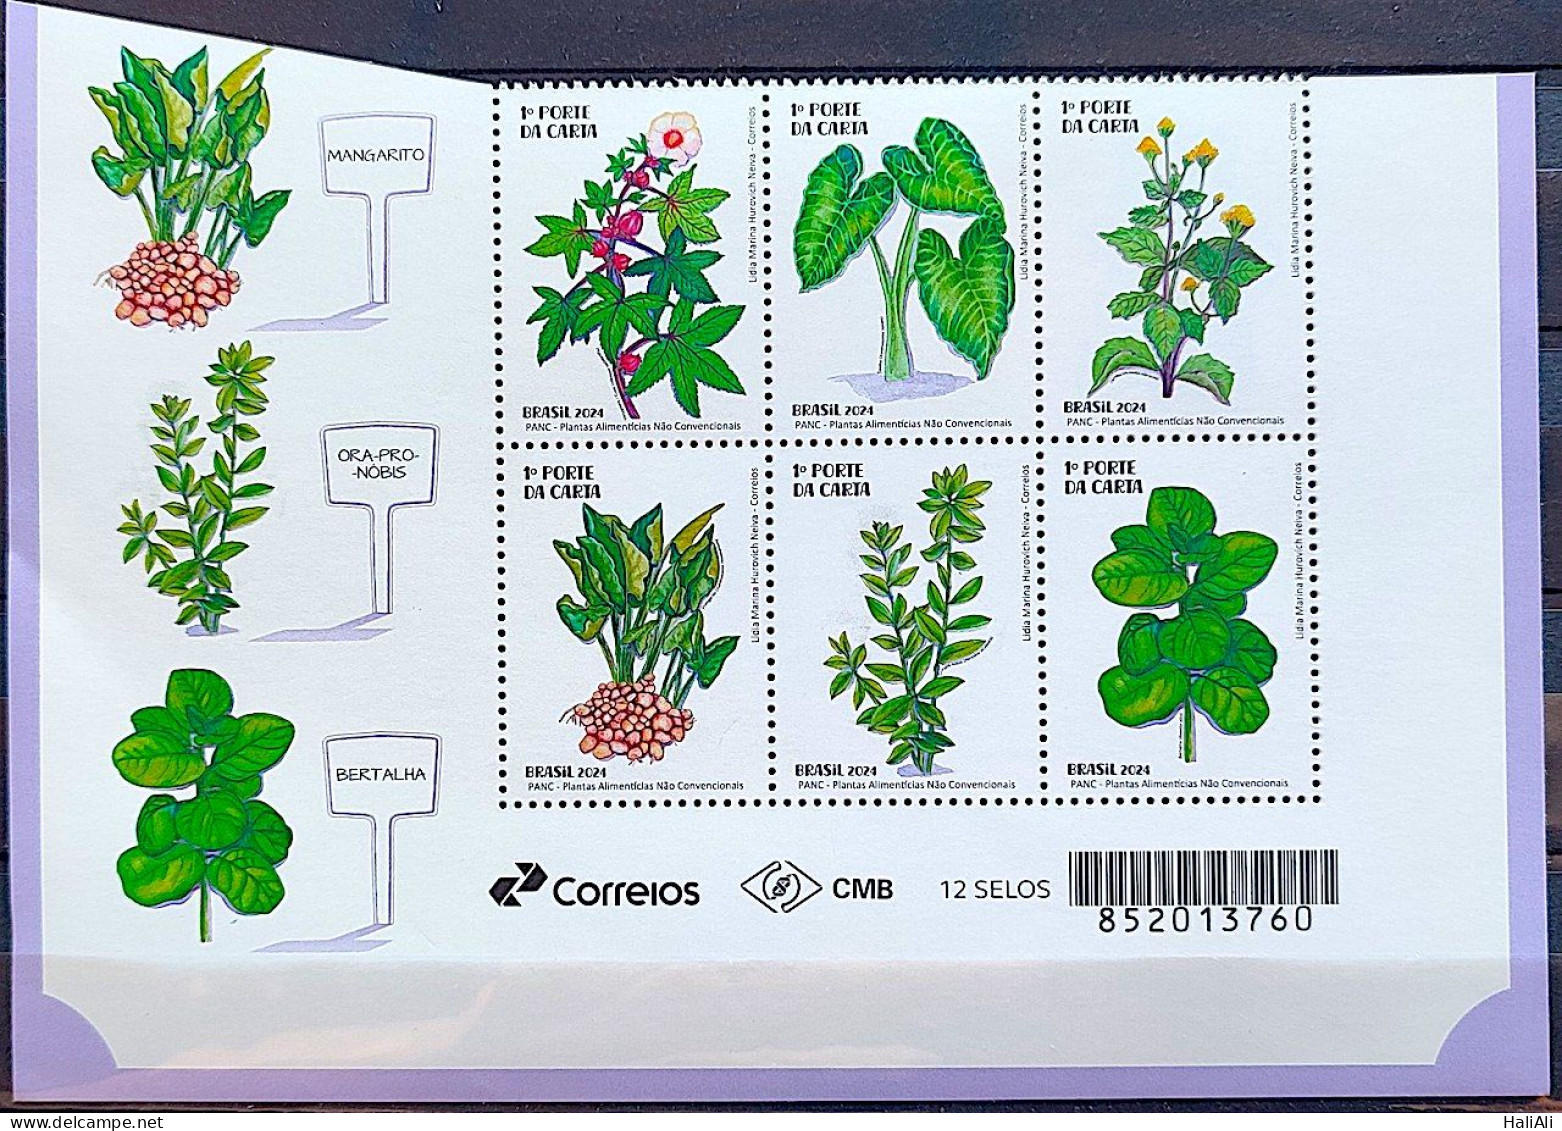 C 4148 Brazil Stamp Food Plants PANC Gastronomy 2024 Vignette Correios Bar Code - Unused Stamps